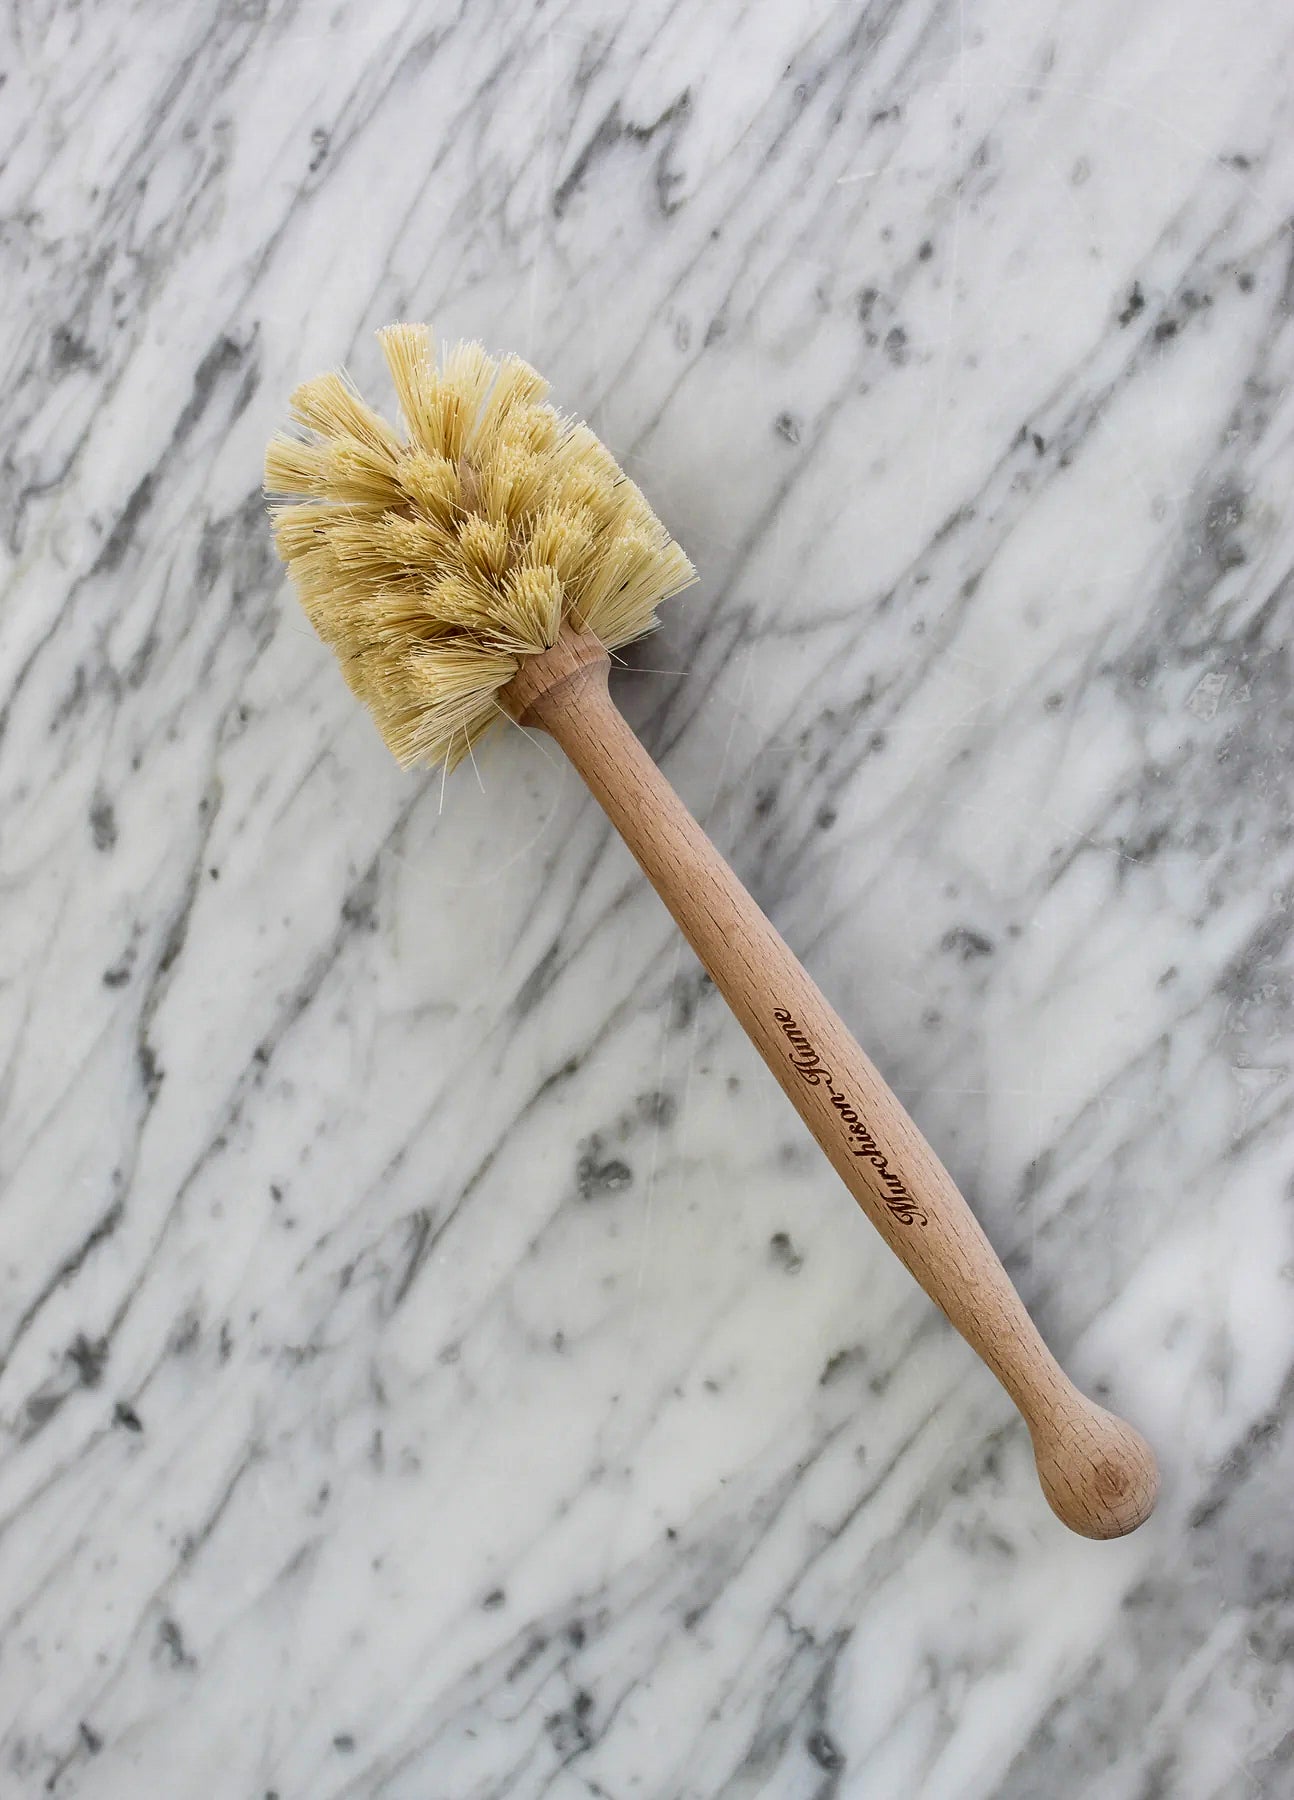 Wooden Vegetable Brush – Biddle and Bop